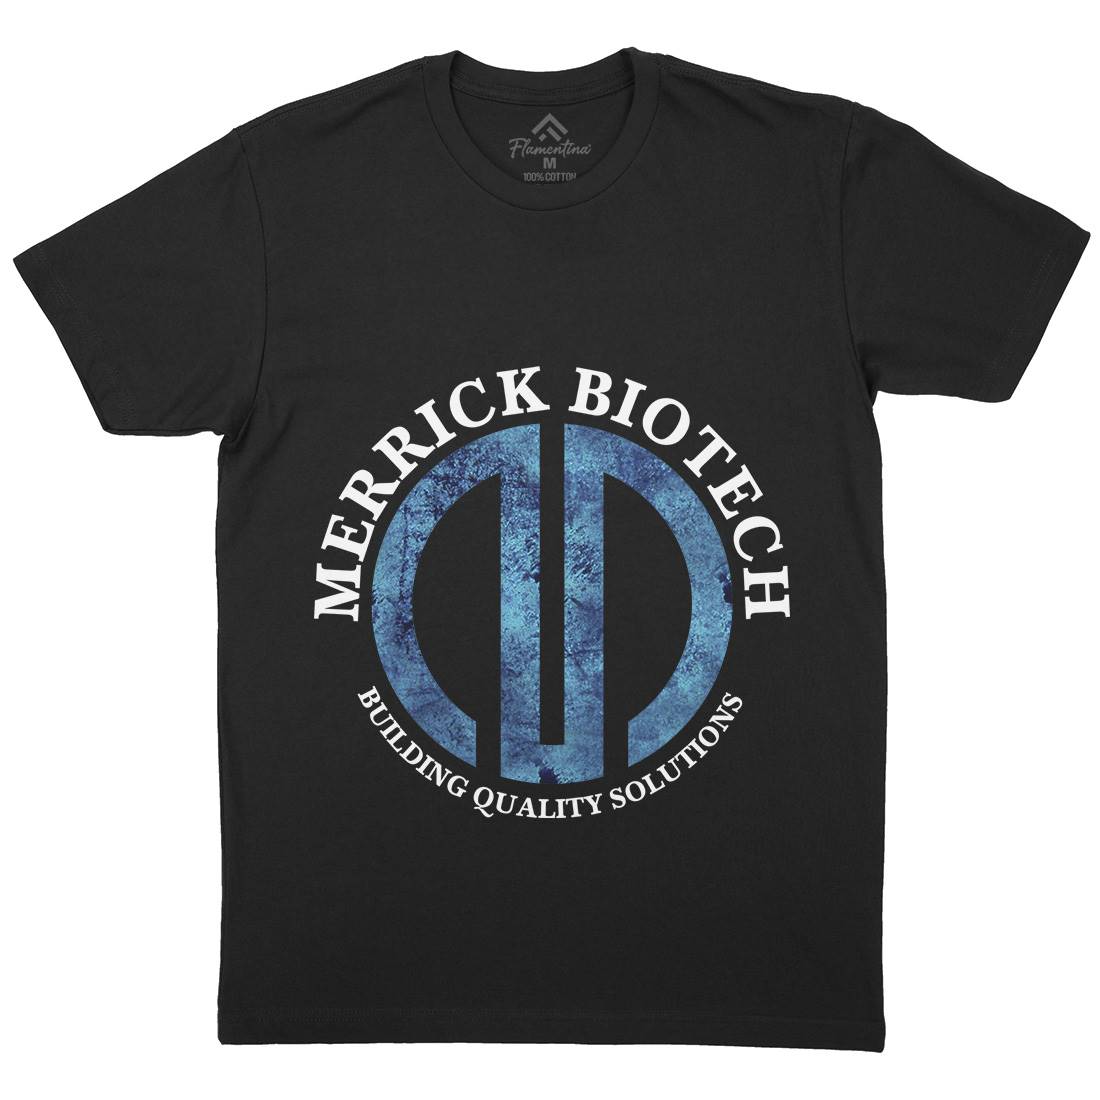 Merrick Biotech Mens Crew Neck T-Shirt Space D393